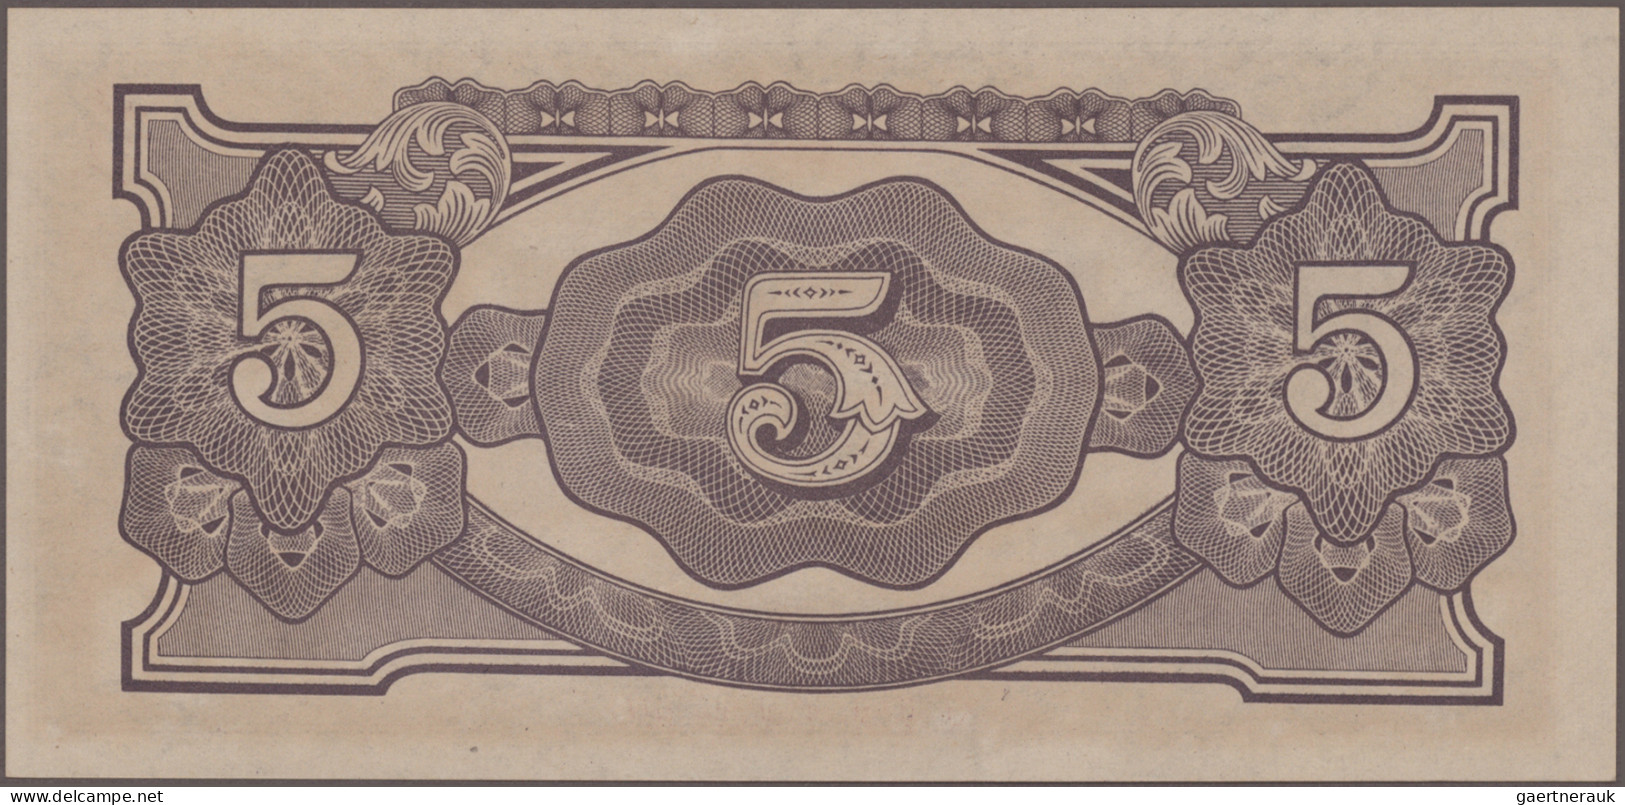 Malaya: Japanese Government – MALAYA, Lot With 11 Banknotes, 1942-1945 Series, W - Malaysia